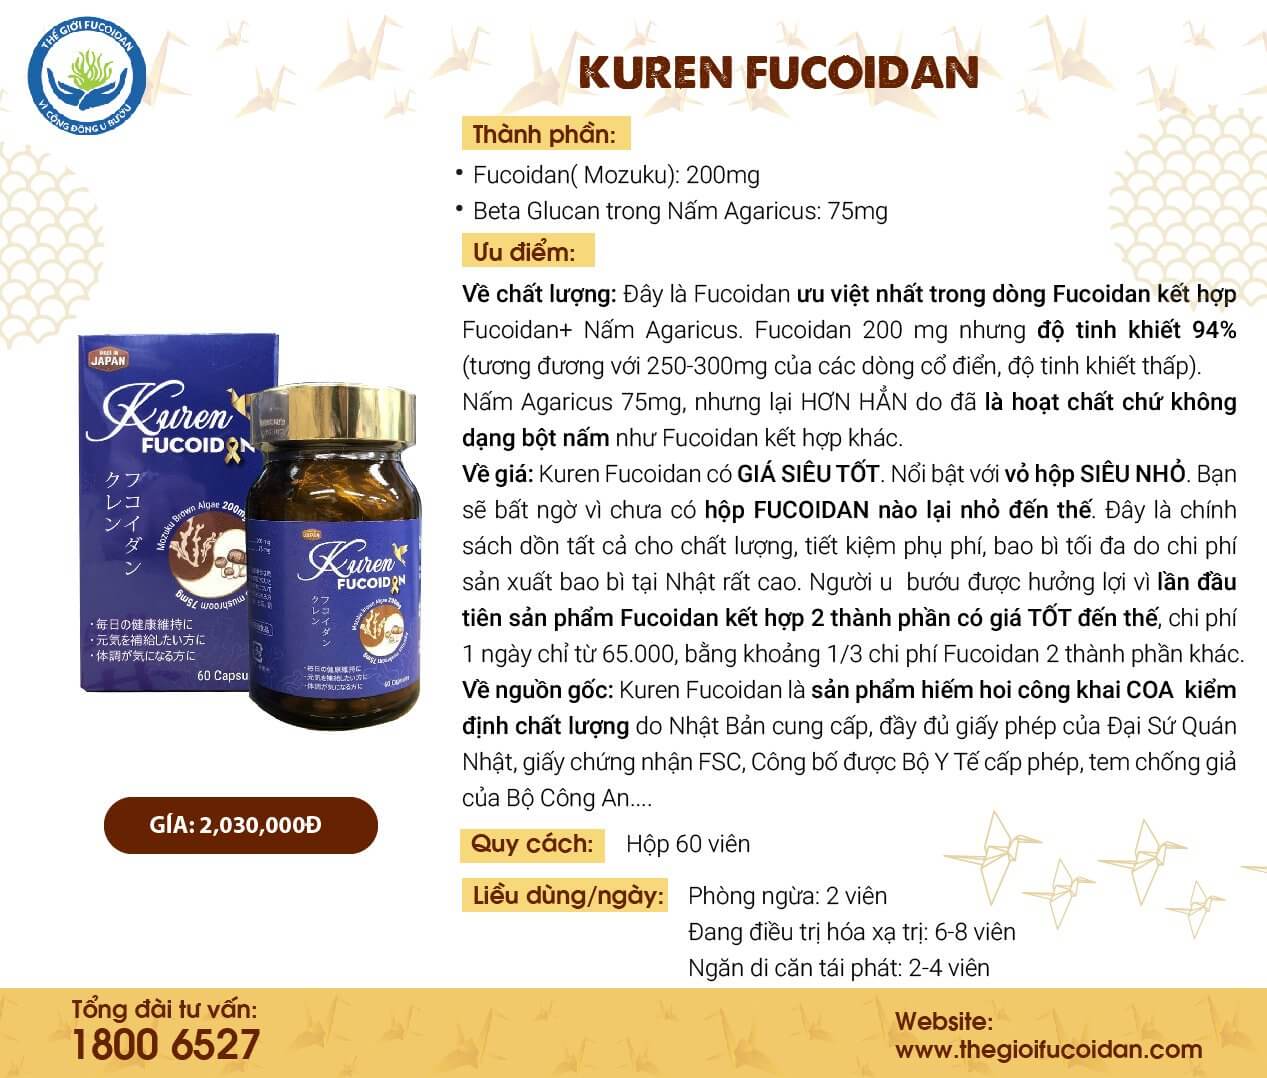 Thông tin sản phẩm Kuren Fucoidan